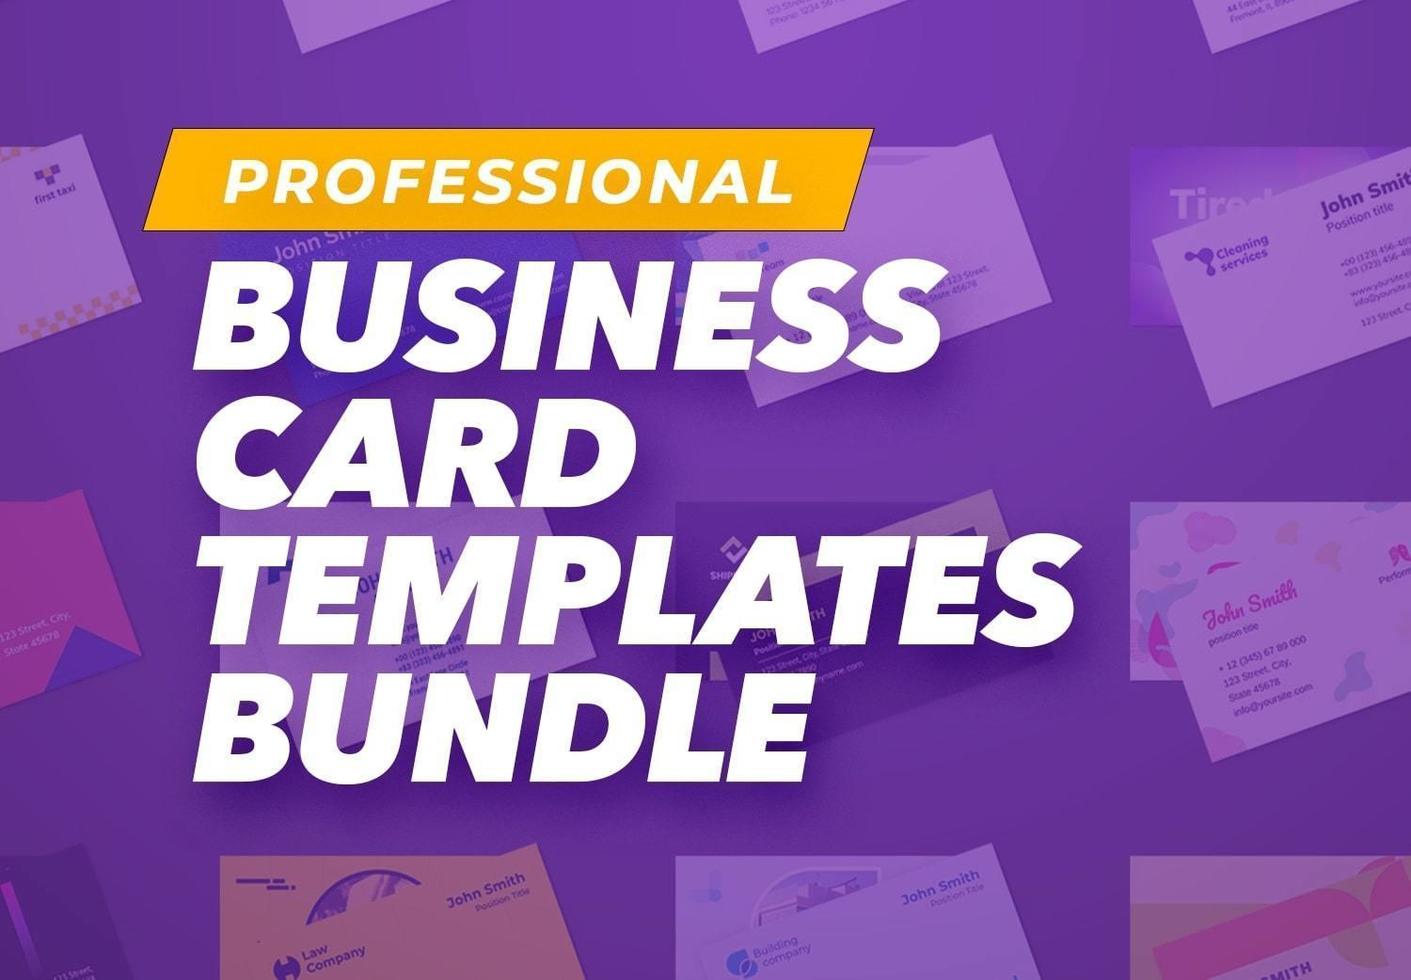 Professional Business Card Templates Bundle